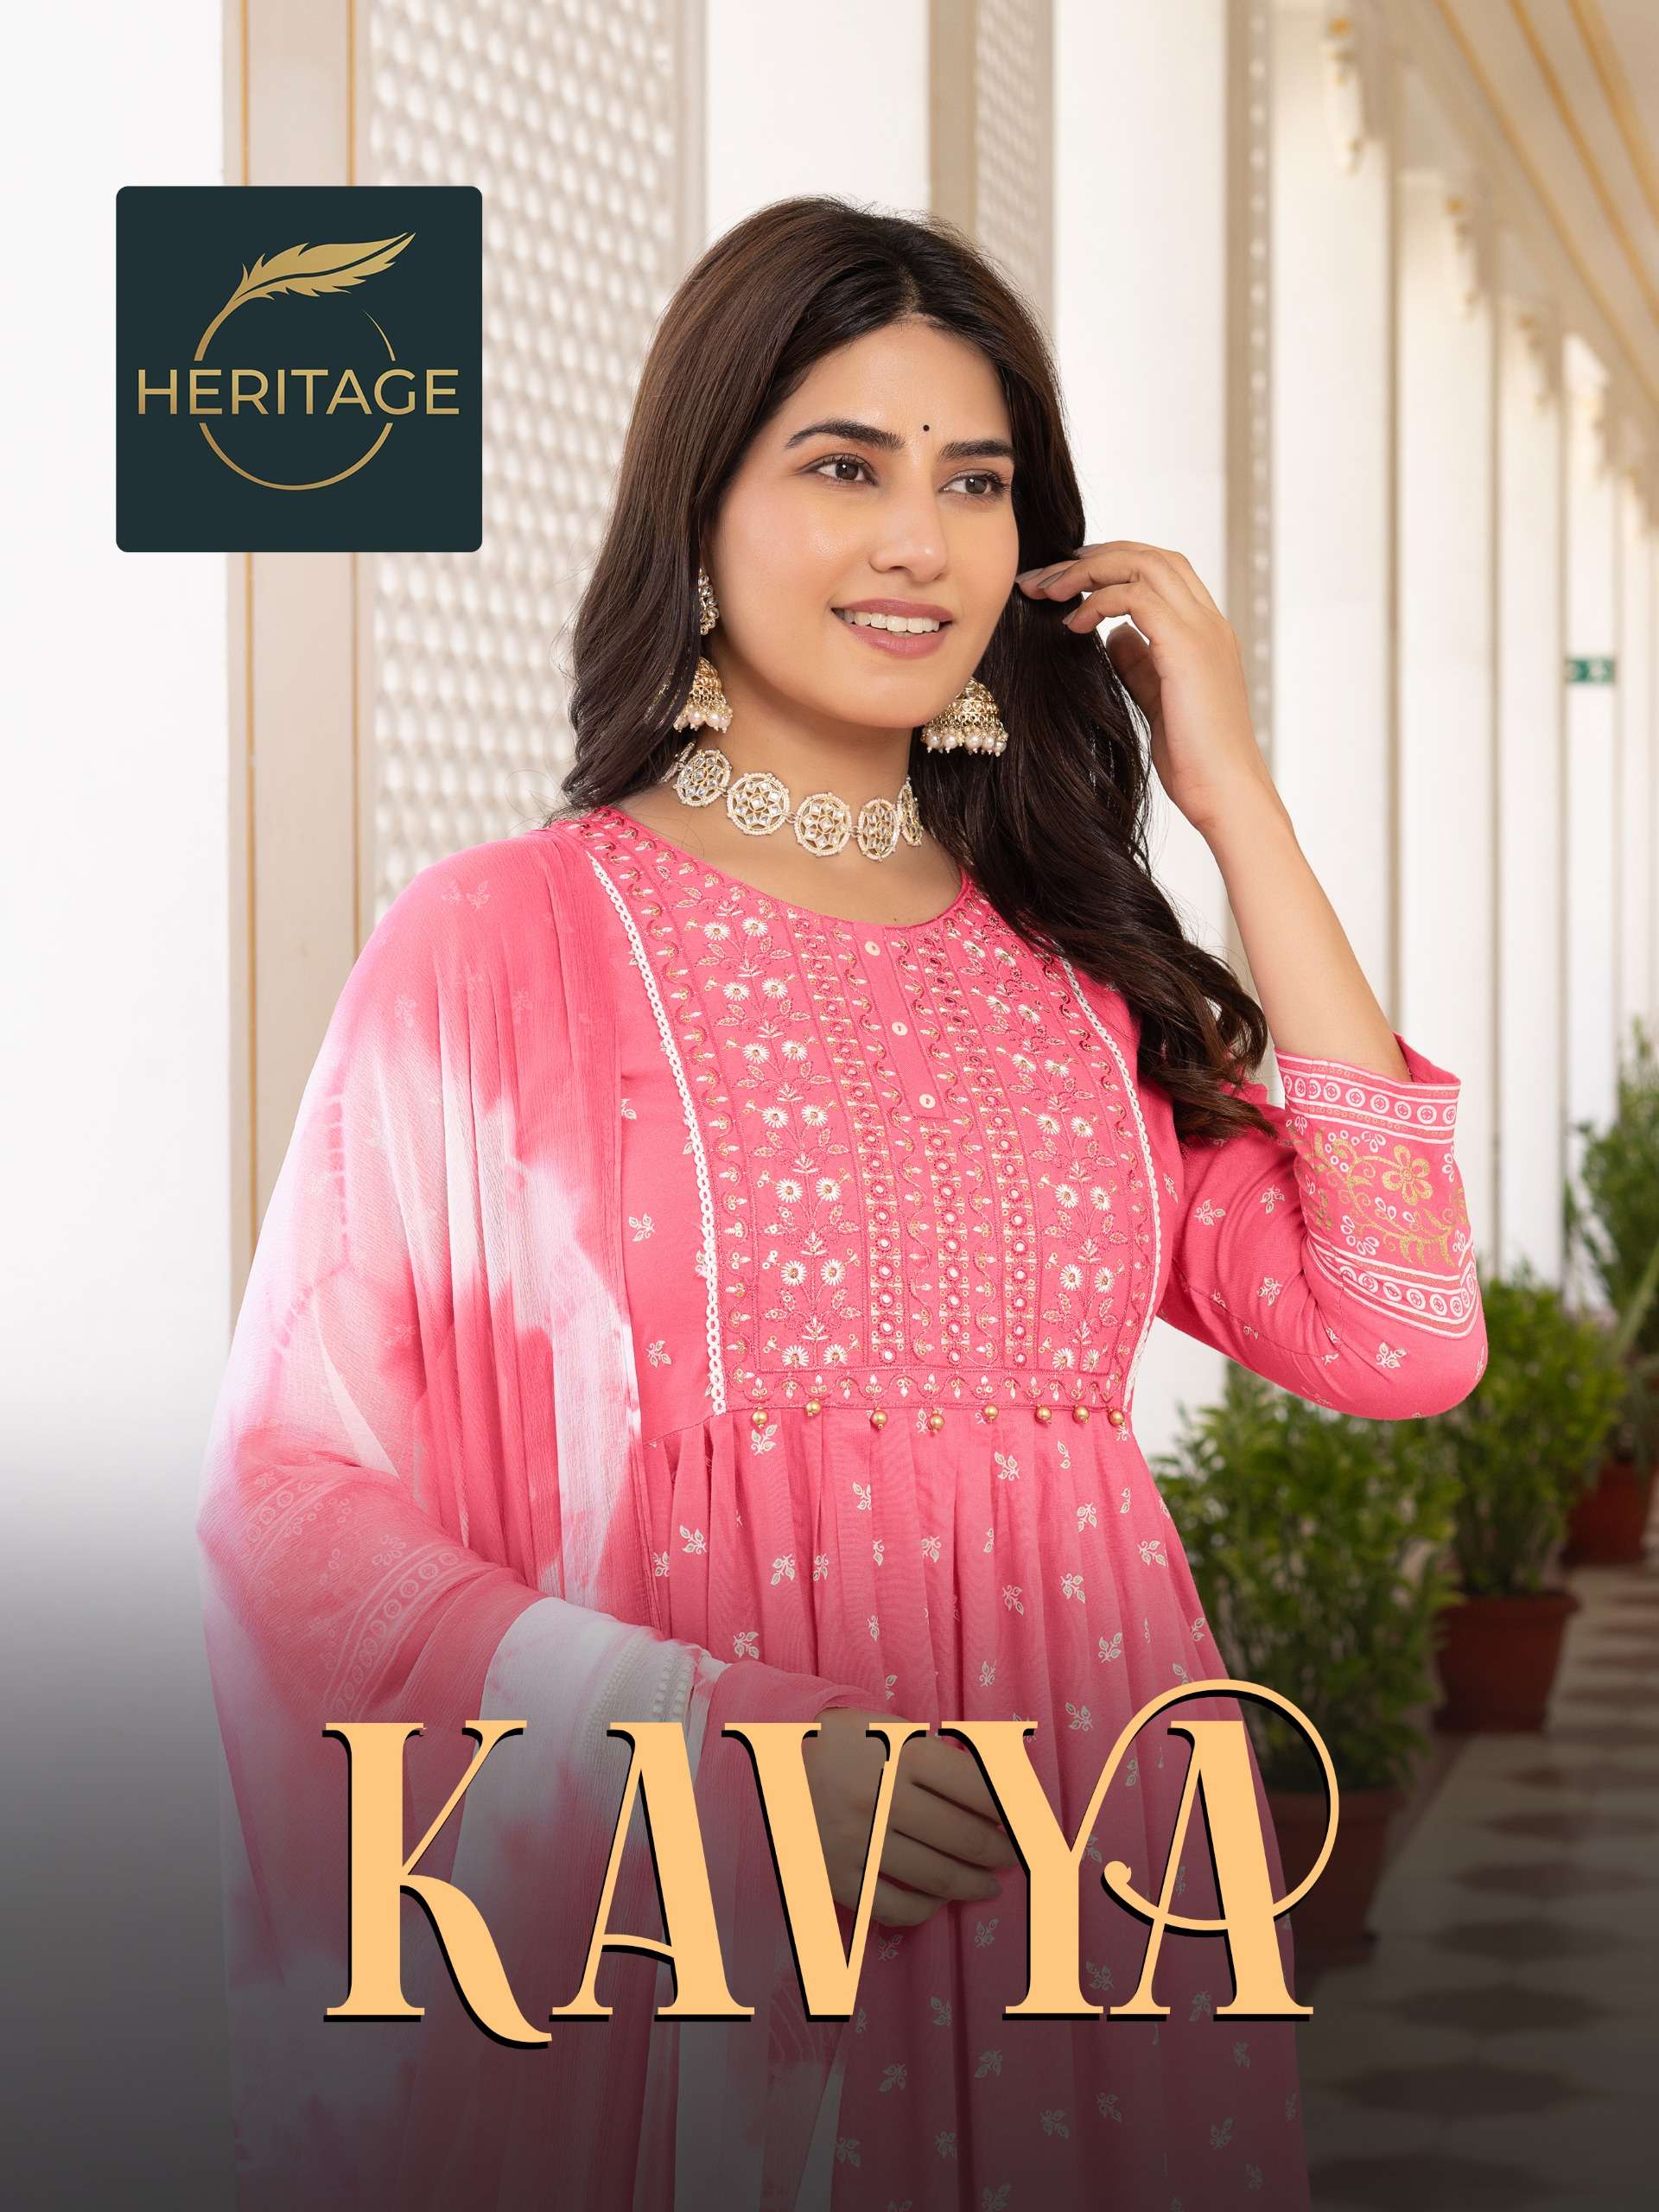 kavya heritage rayon designer kurtis latest catalogue wholesale rate dealer surat gujarat 